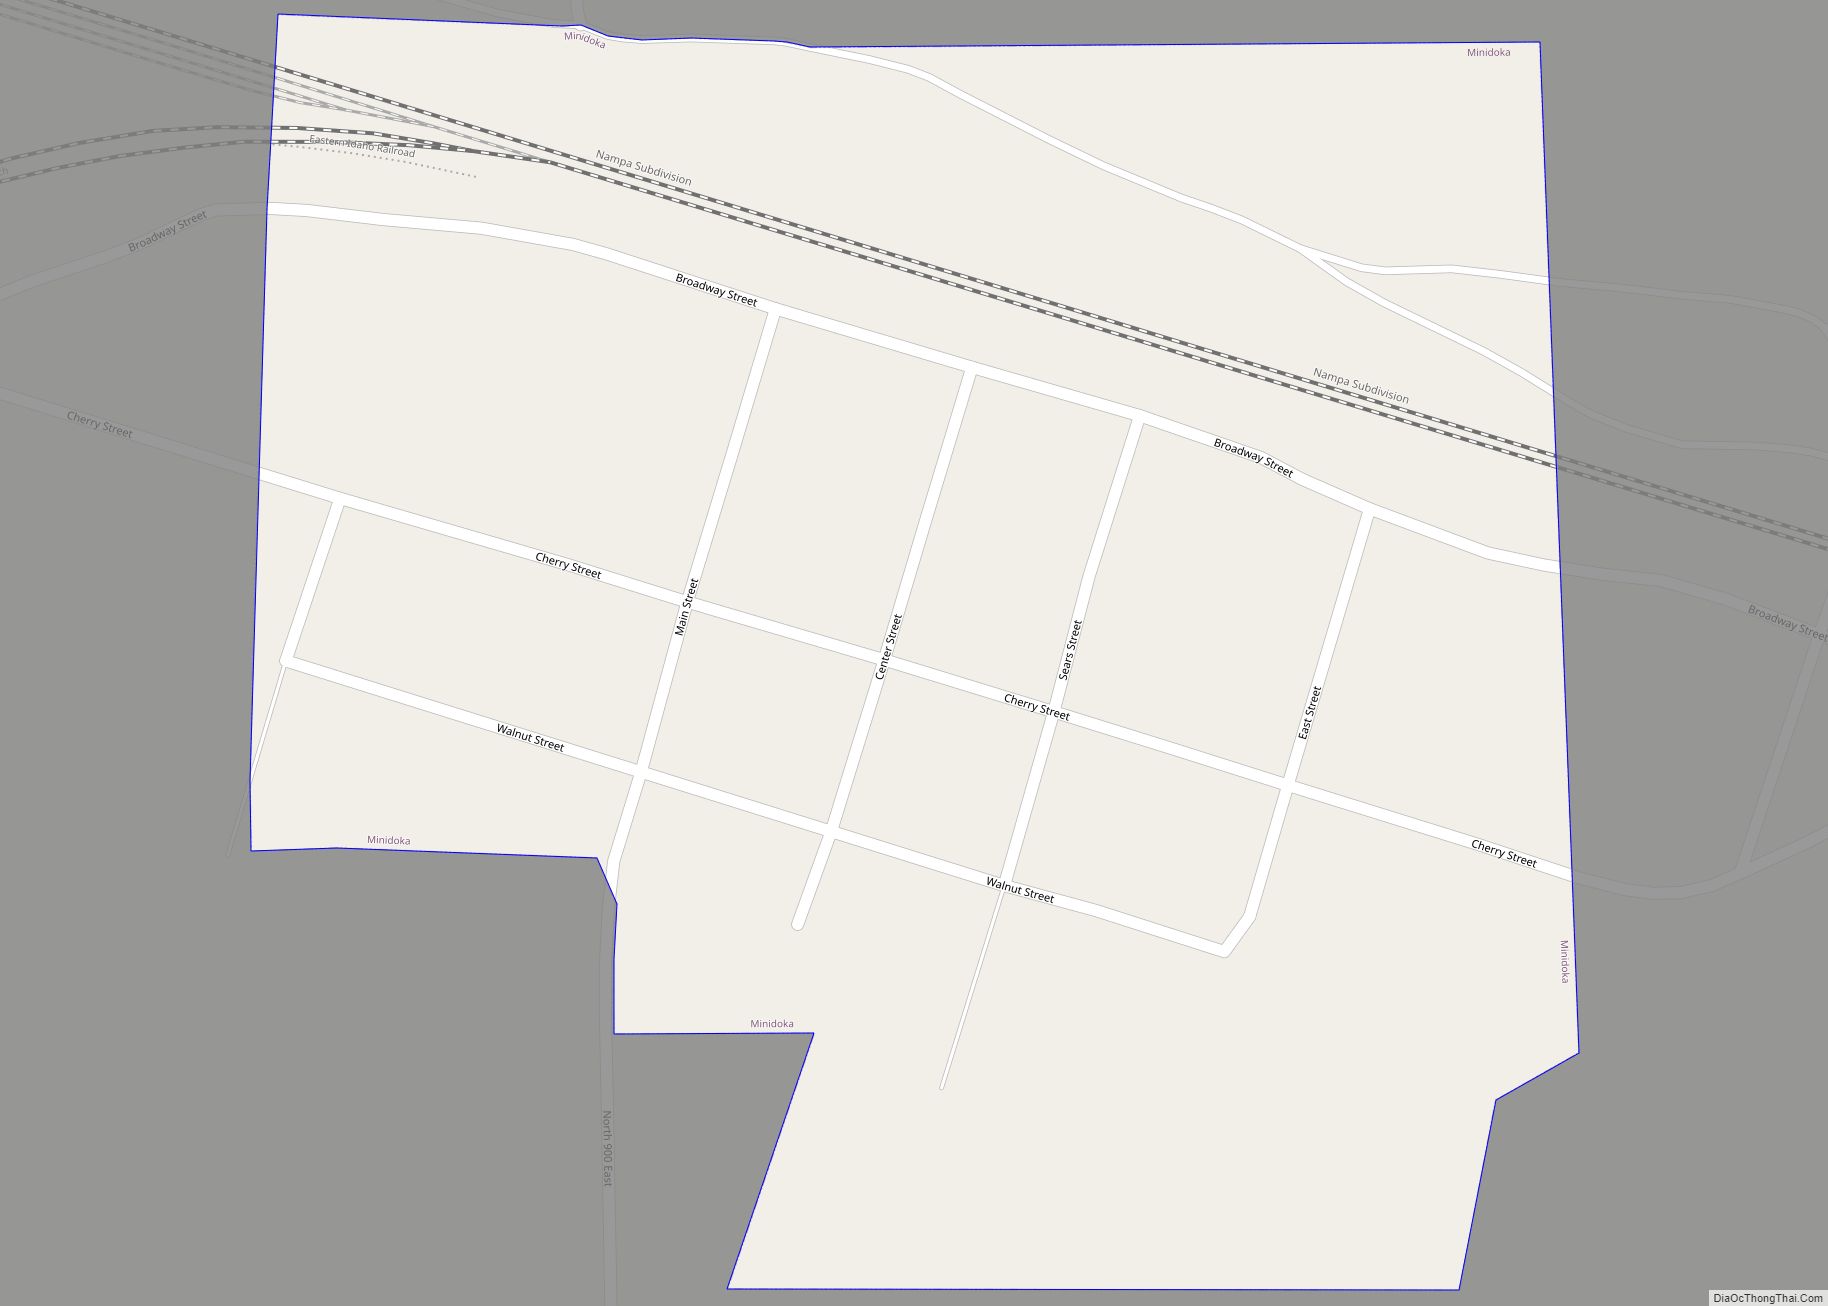 Map of Minidoka city